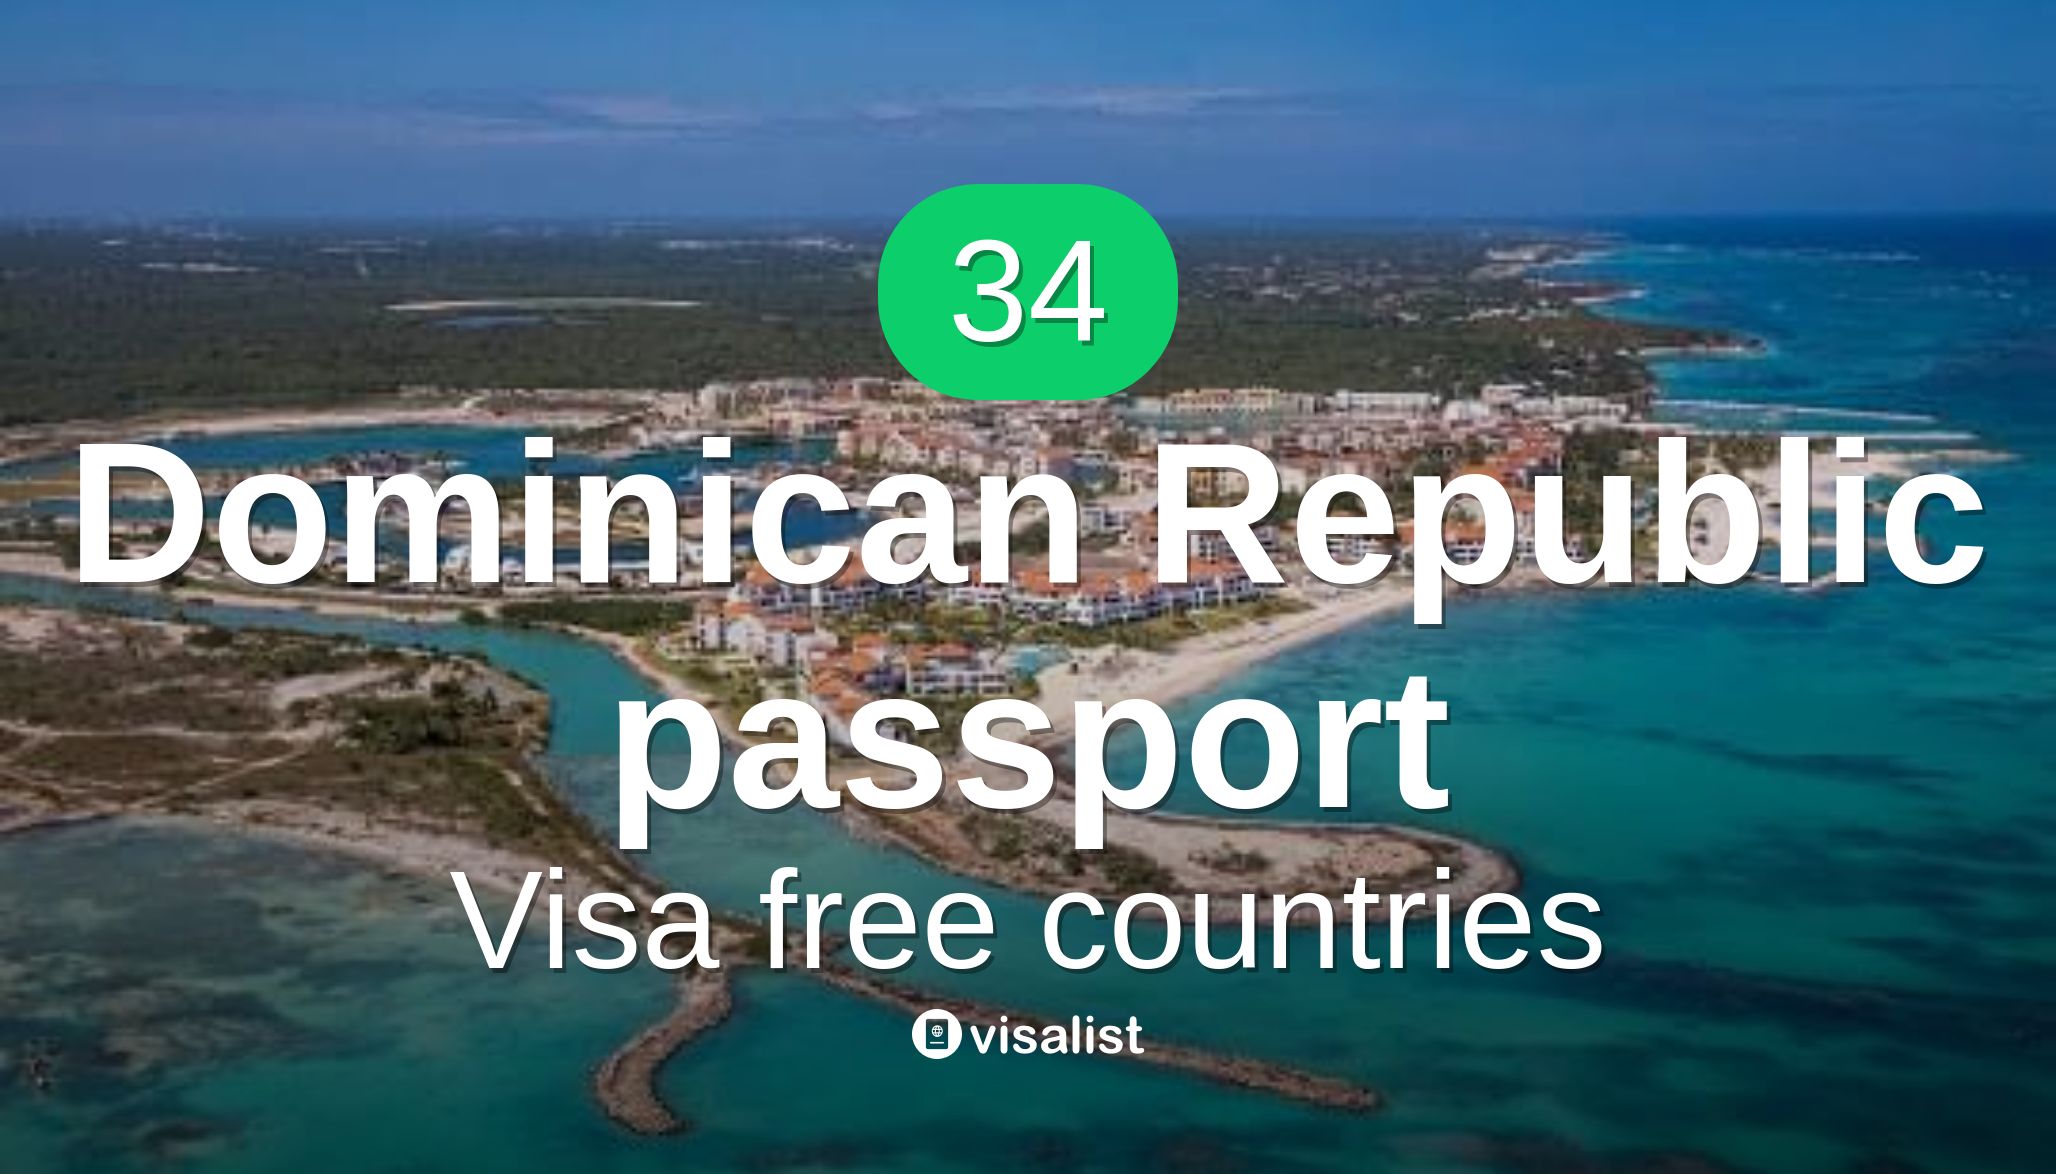 dominican republic visit visa